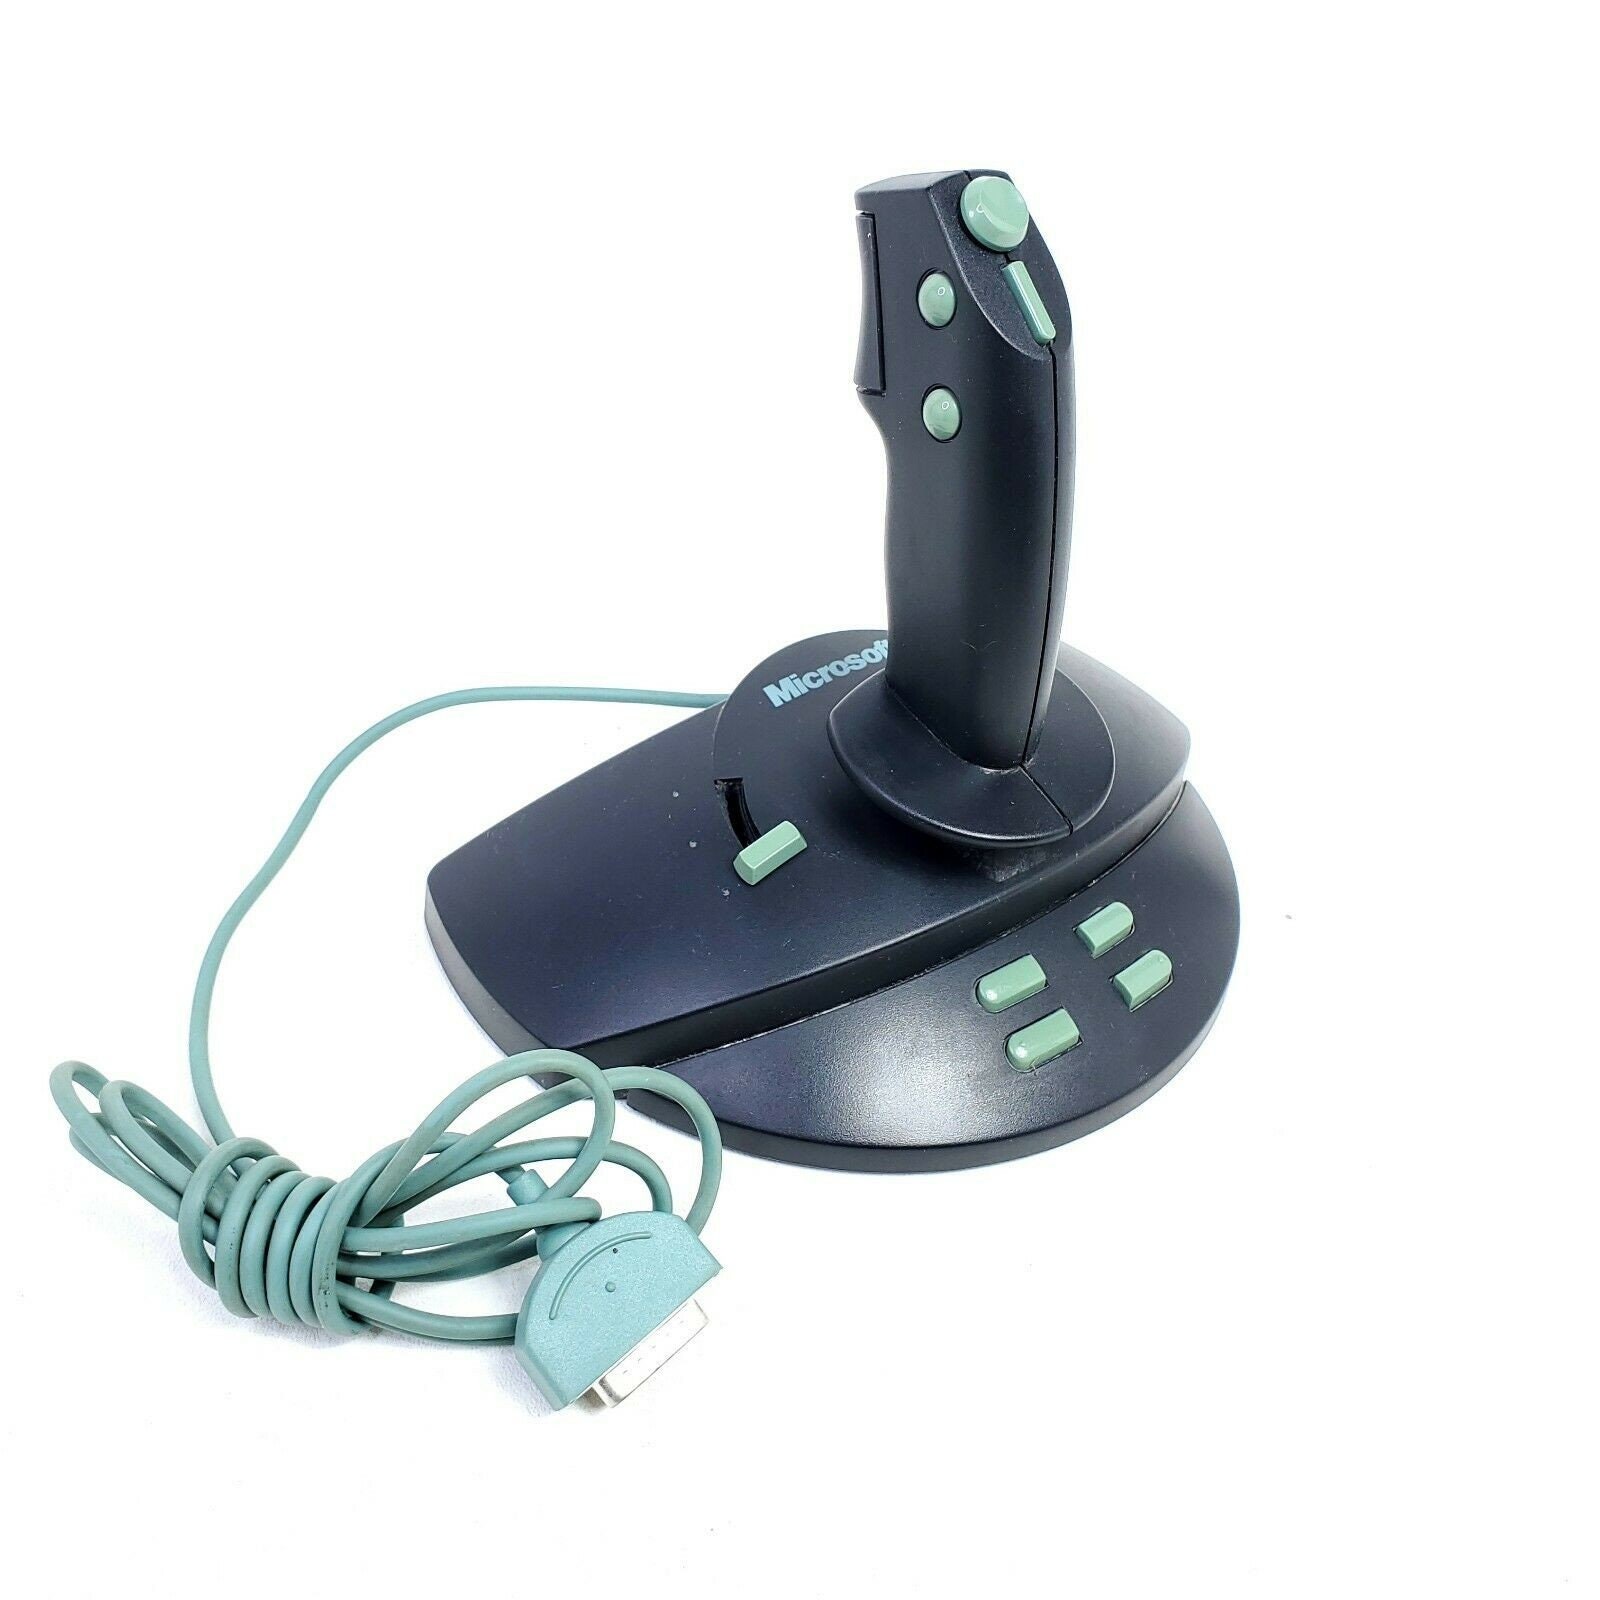 Microsoft Sidewinder 3D Pro PC Gameport Joystick Flight Stick